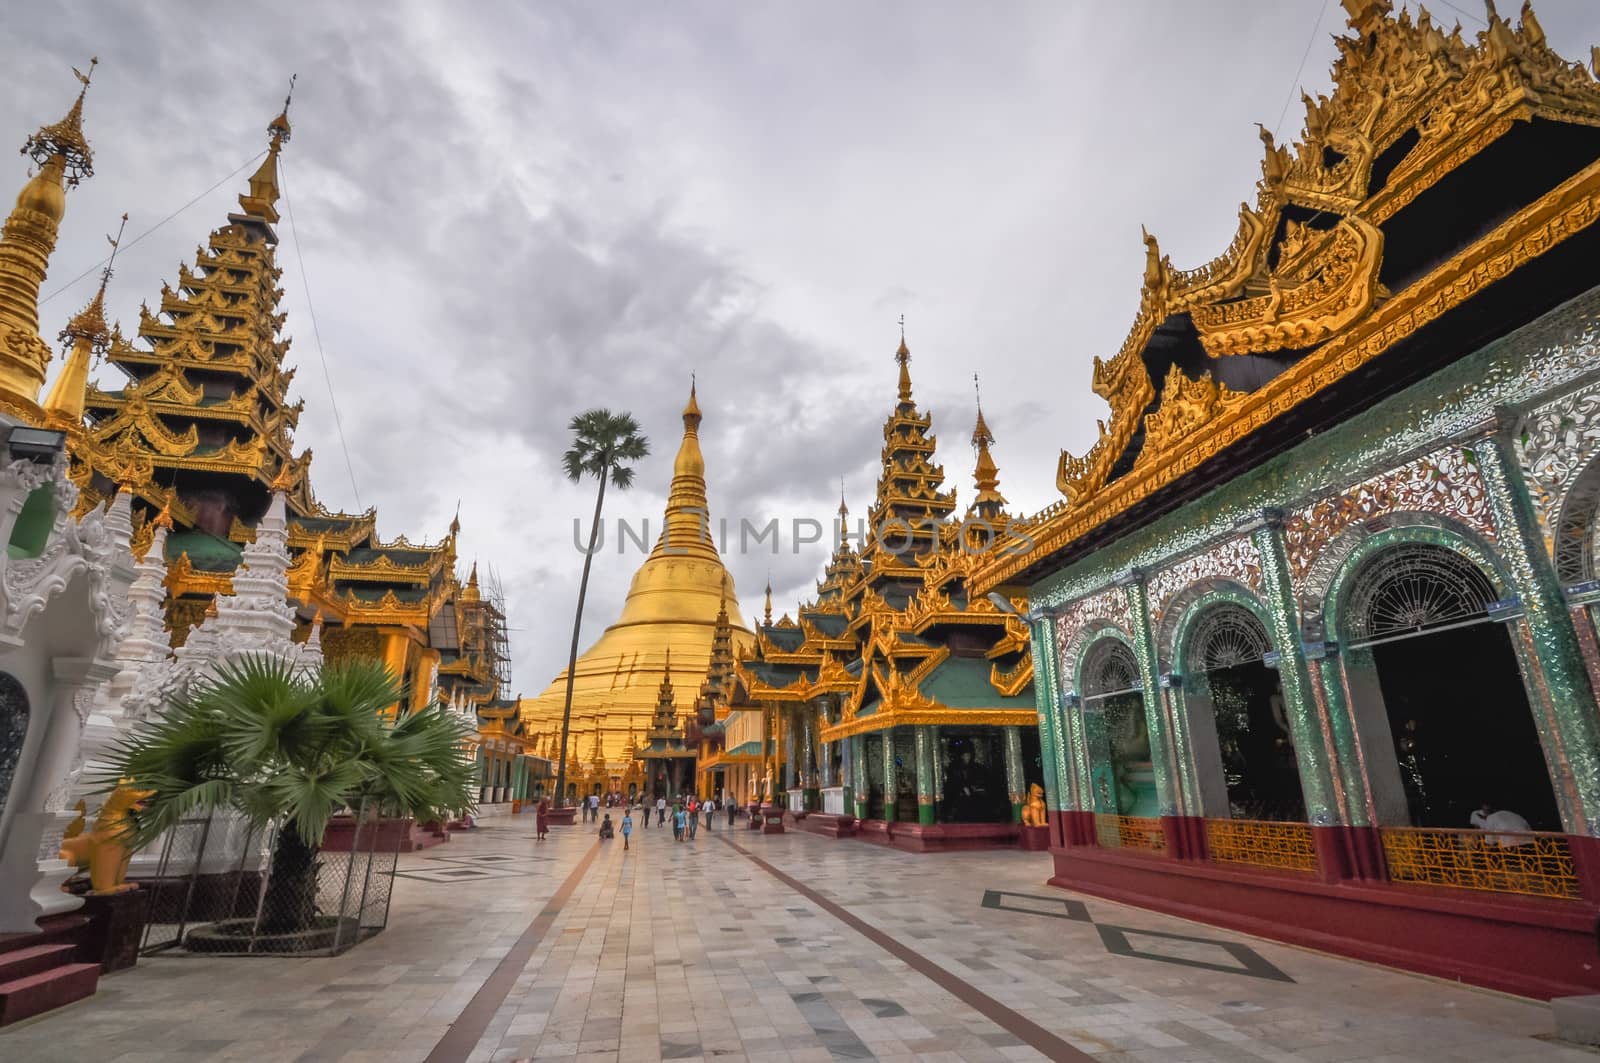 Shwedagon Pagoda Temple in Yango by weltreisendertj